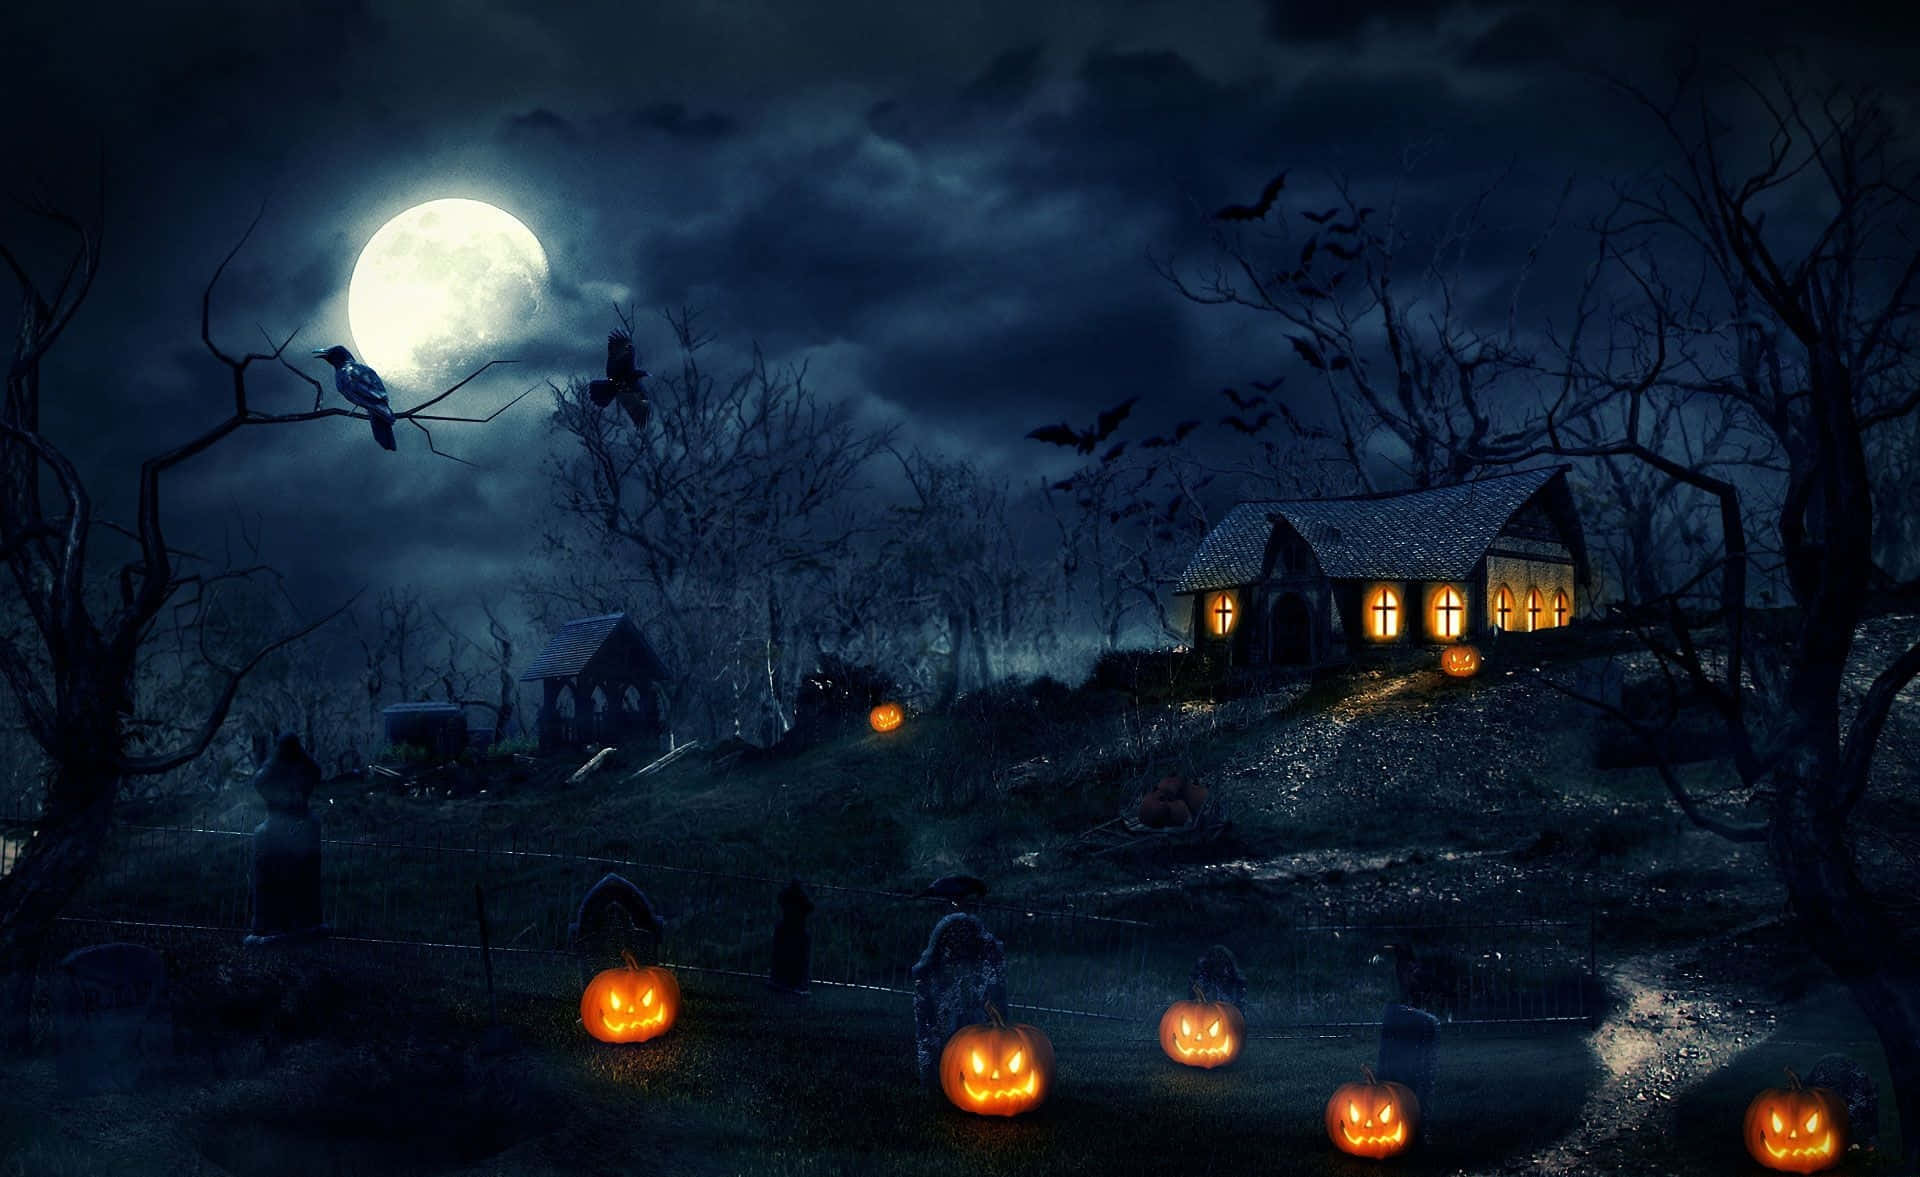 "A Spooky Halloween Desktop to Bring Chills" Wallpaper